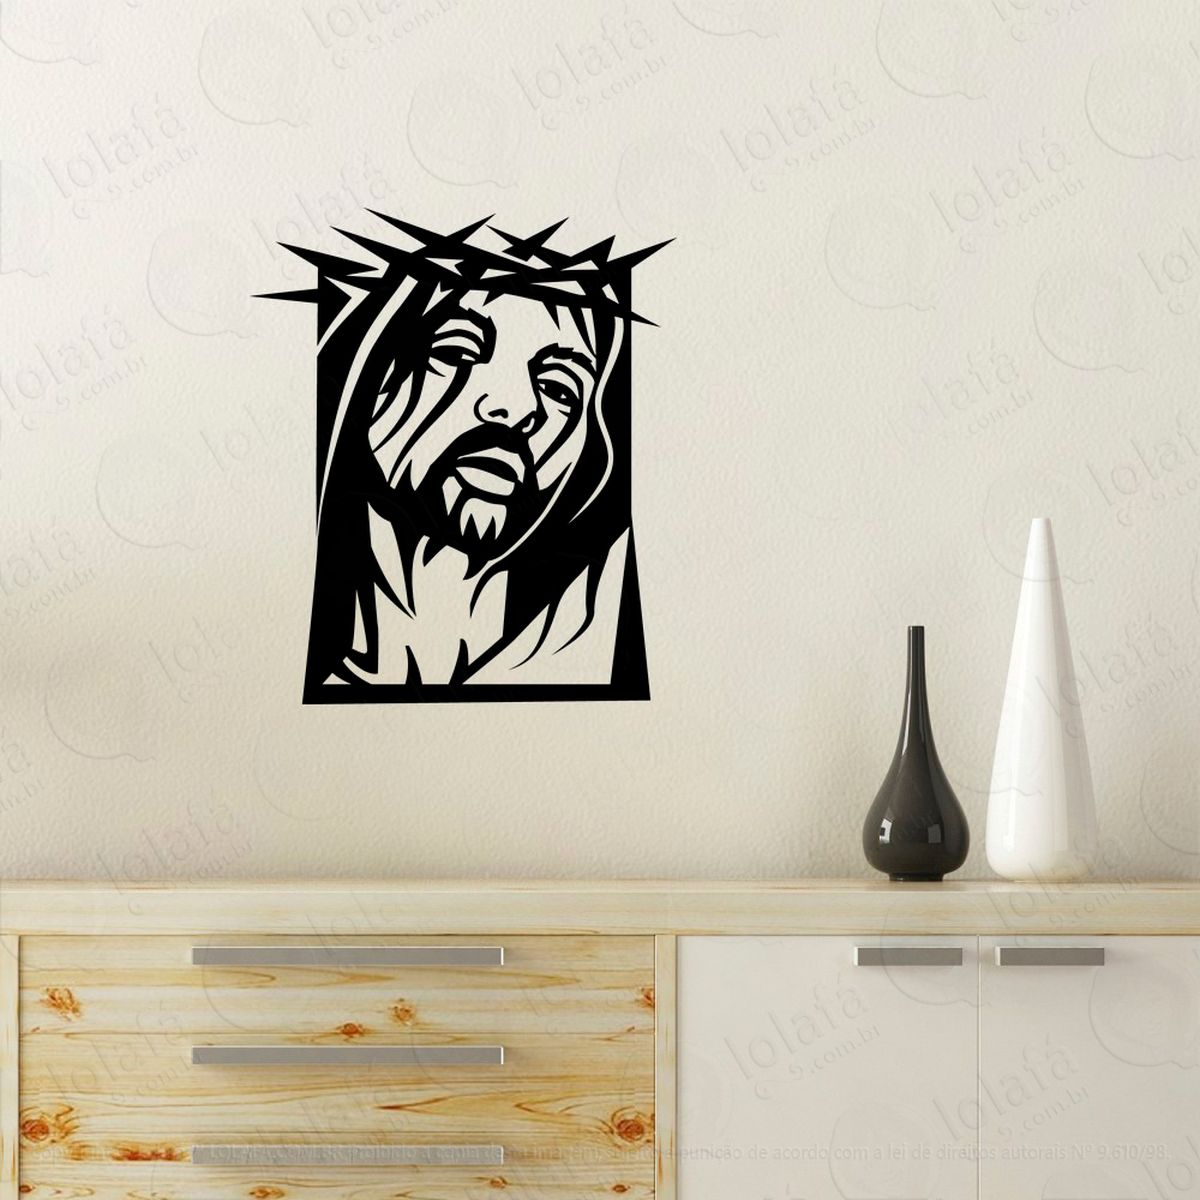 jesus cristo adesivo de parede decorativo para casa, quarto, sala e vidro - mod:13